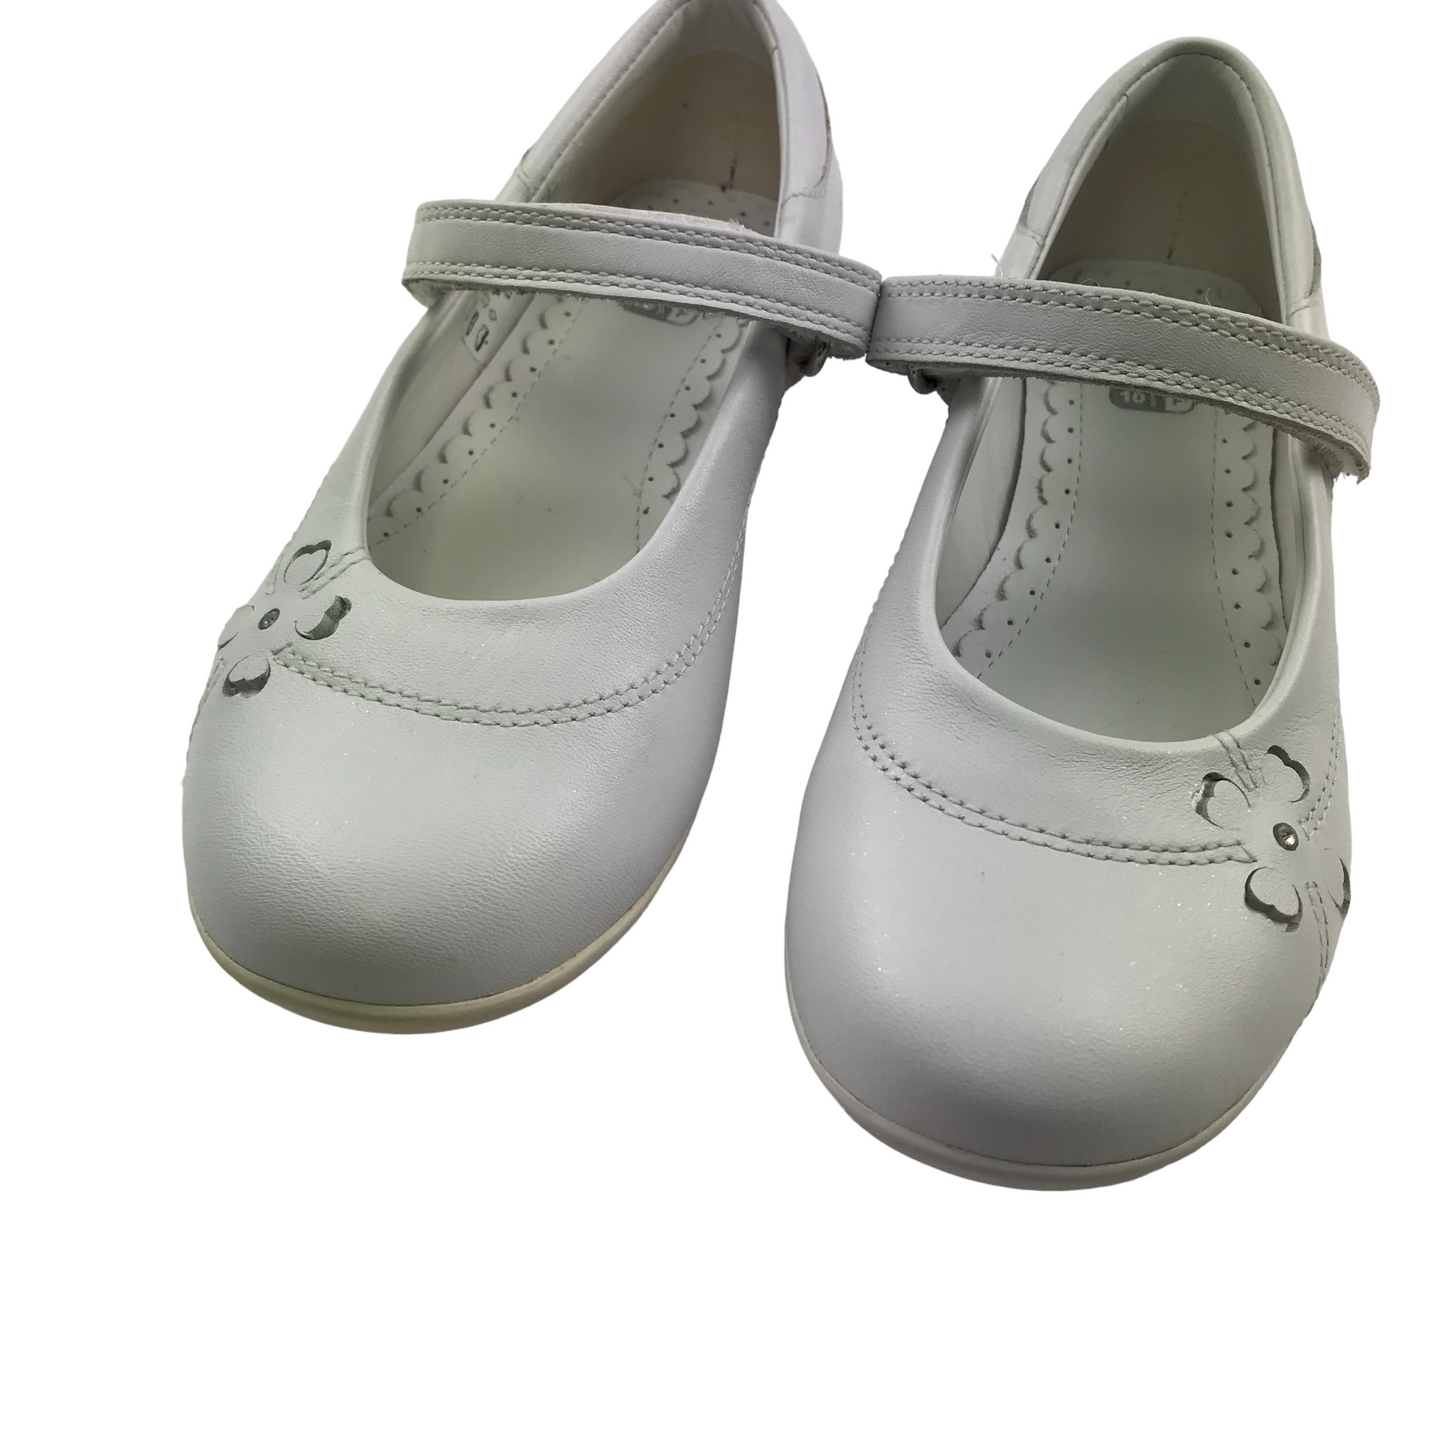 Clarks White Leather Pumps Shoe Size 10.5F junior